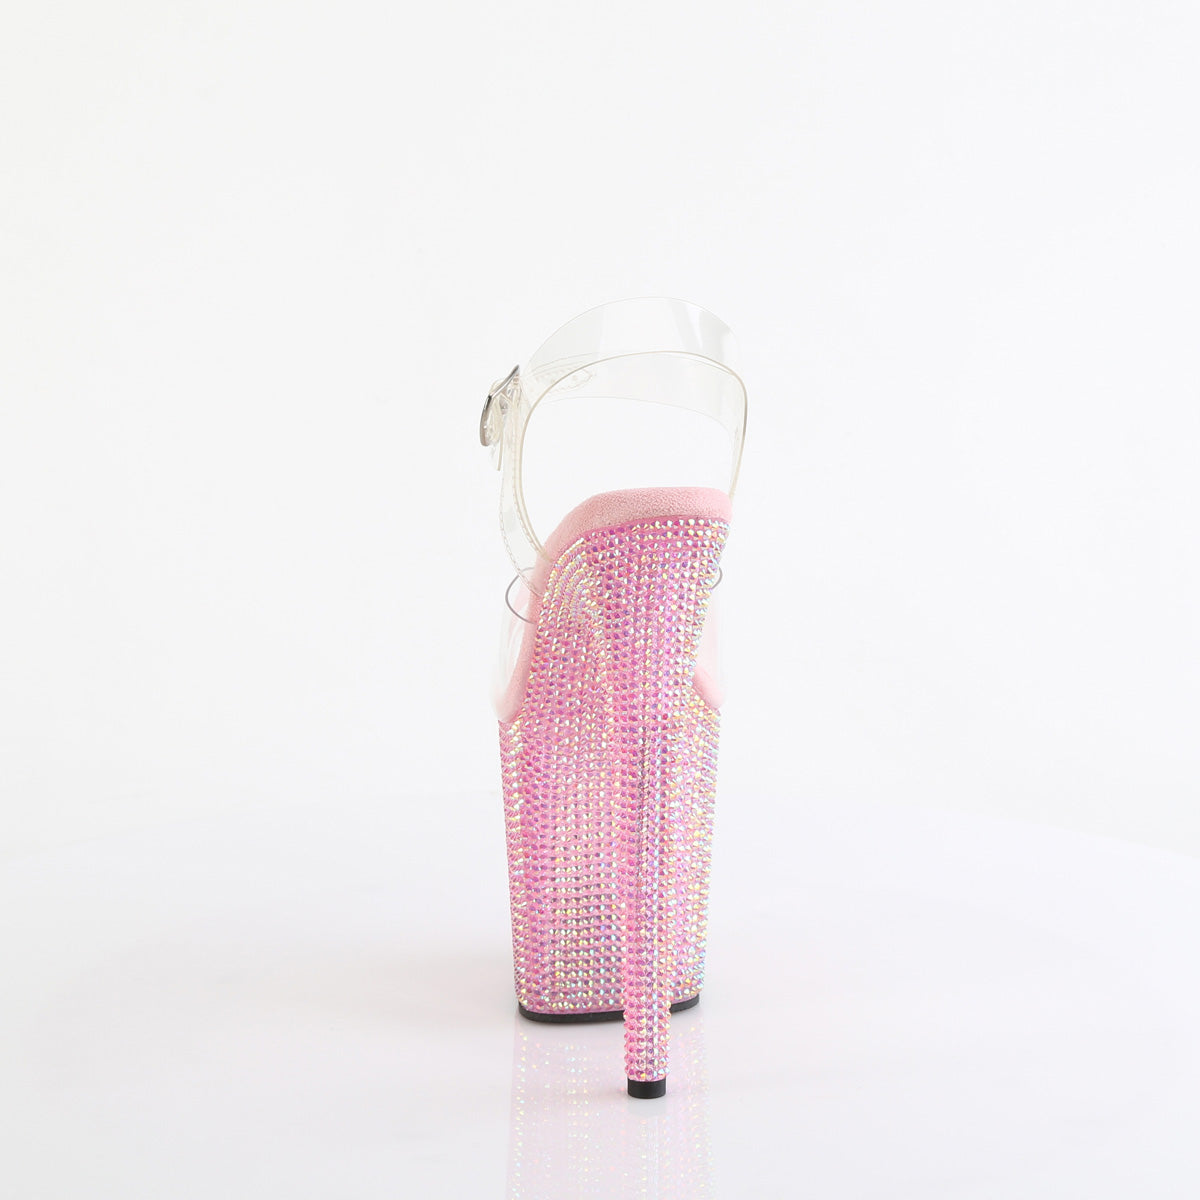 BEJEWELED-808RRS Pleaser Clear/B Pink Rhinestones Platform Shoes [Exotic Dance Shoes]